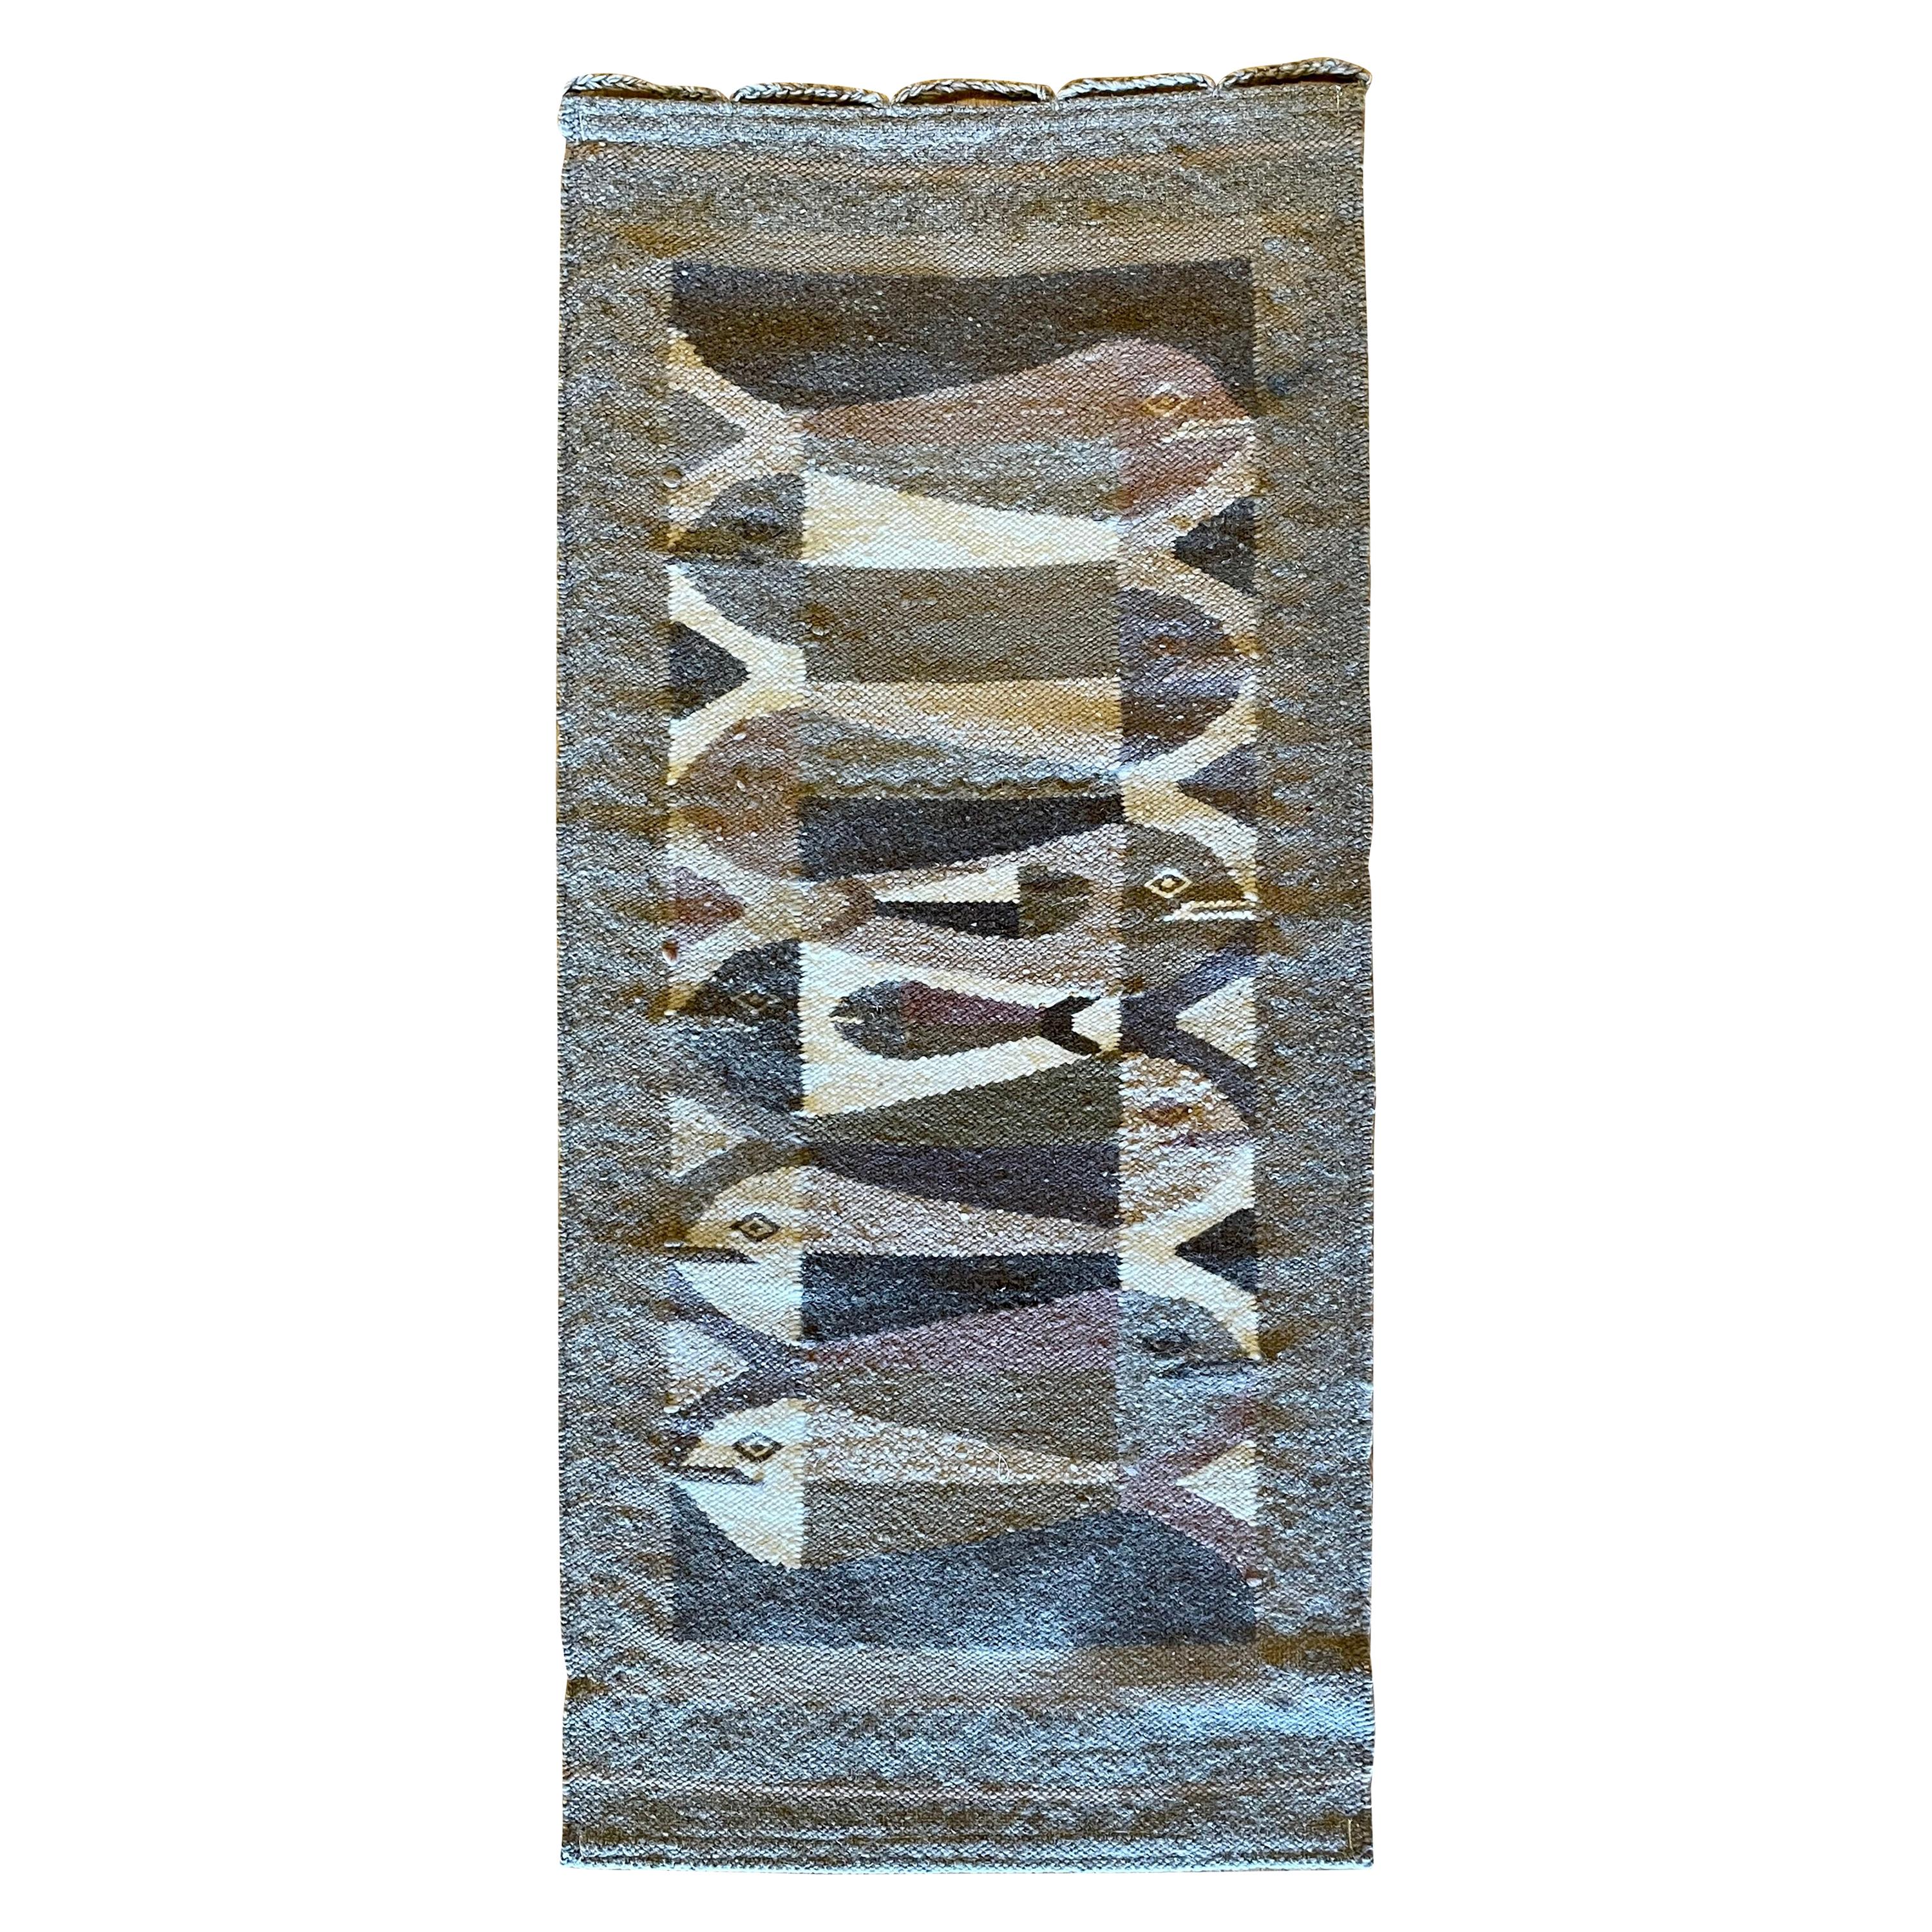 Handwoven Wool Rug/Tapestry after Escher